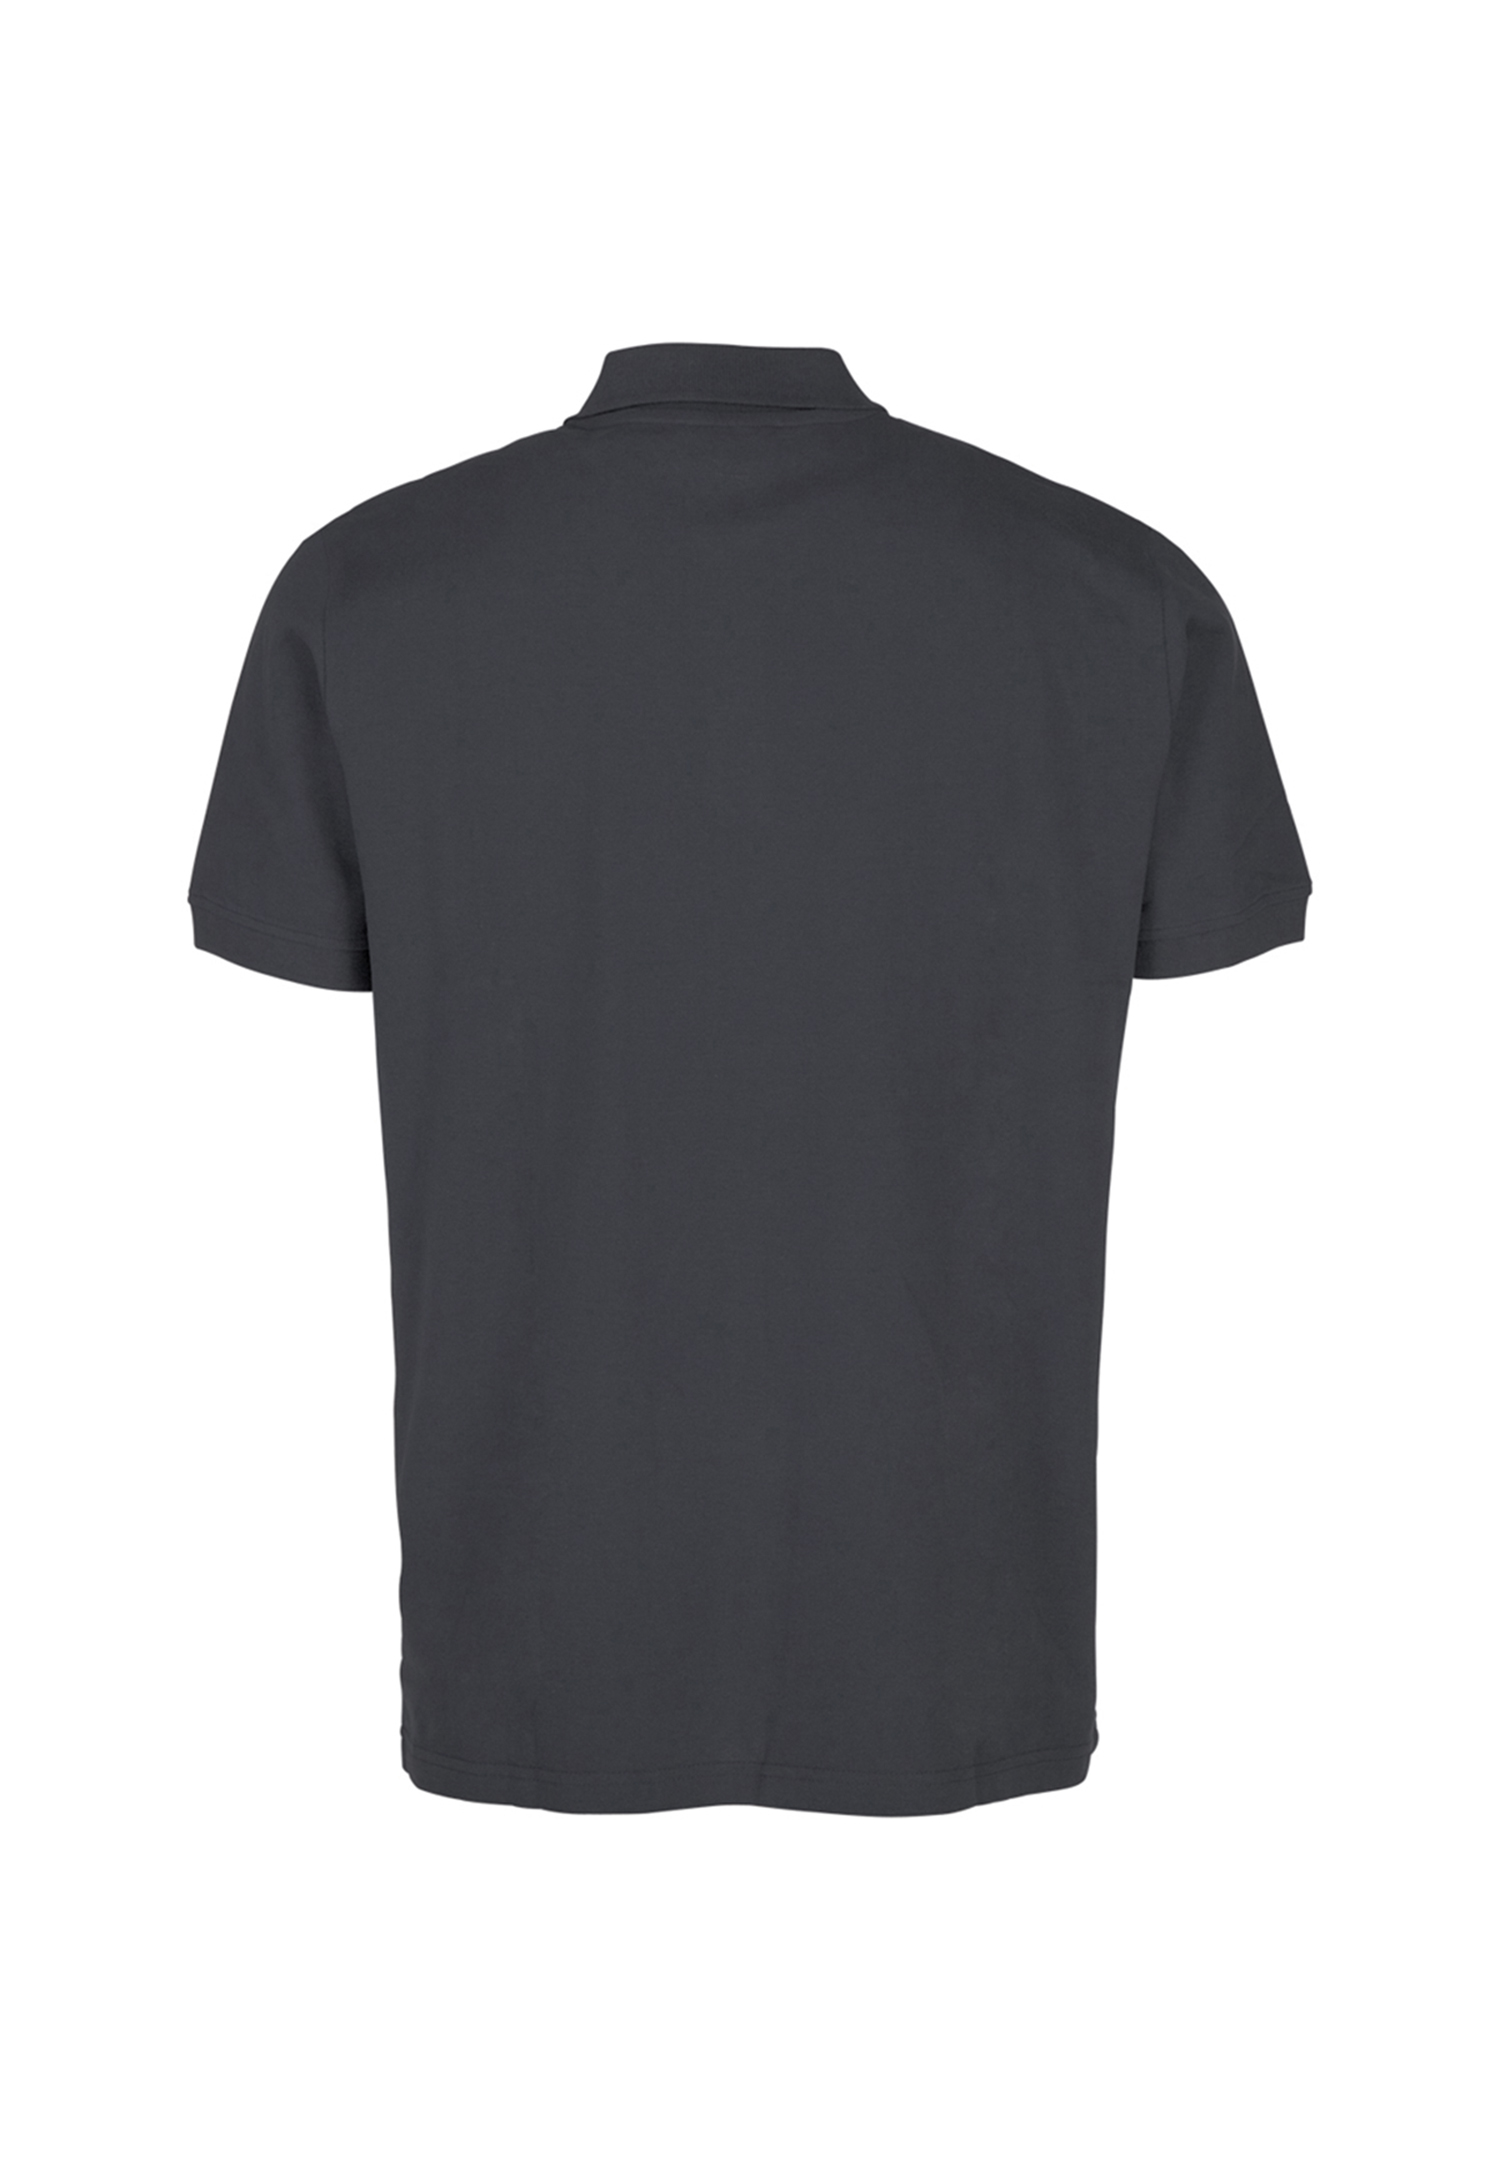 Kappa Unisex Polo Shirt Damen Herren 303173 grau